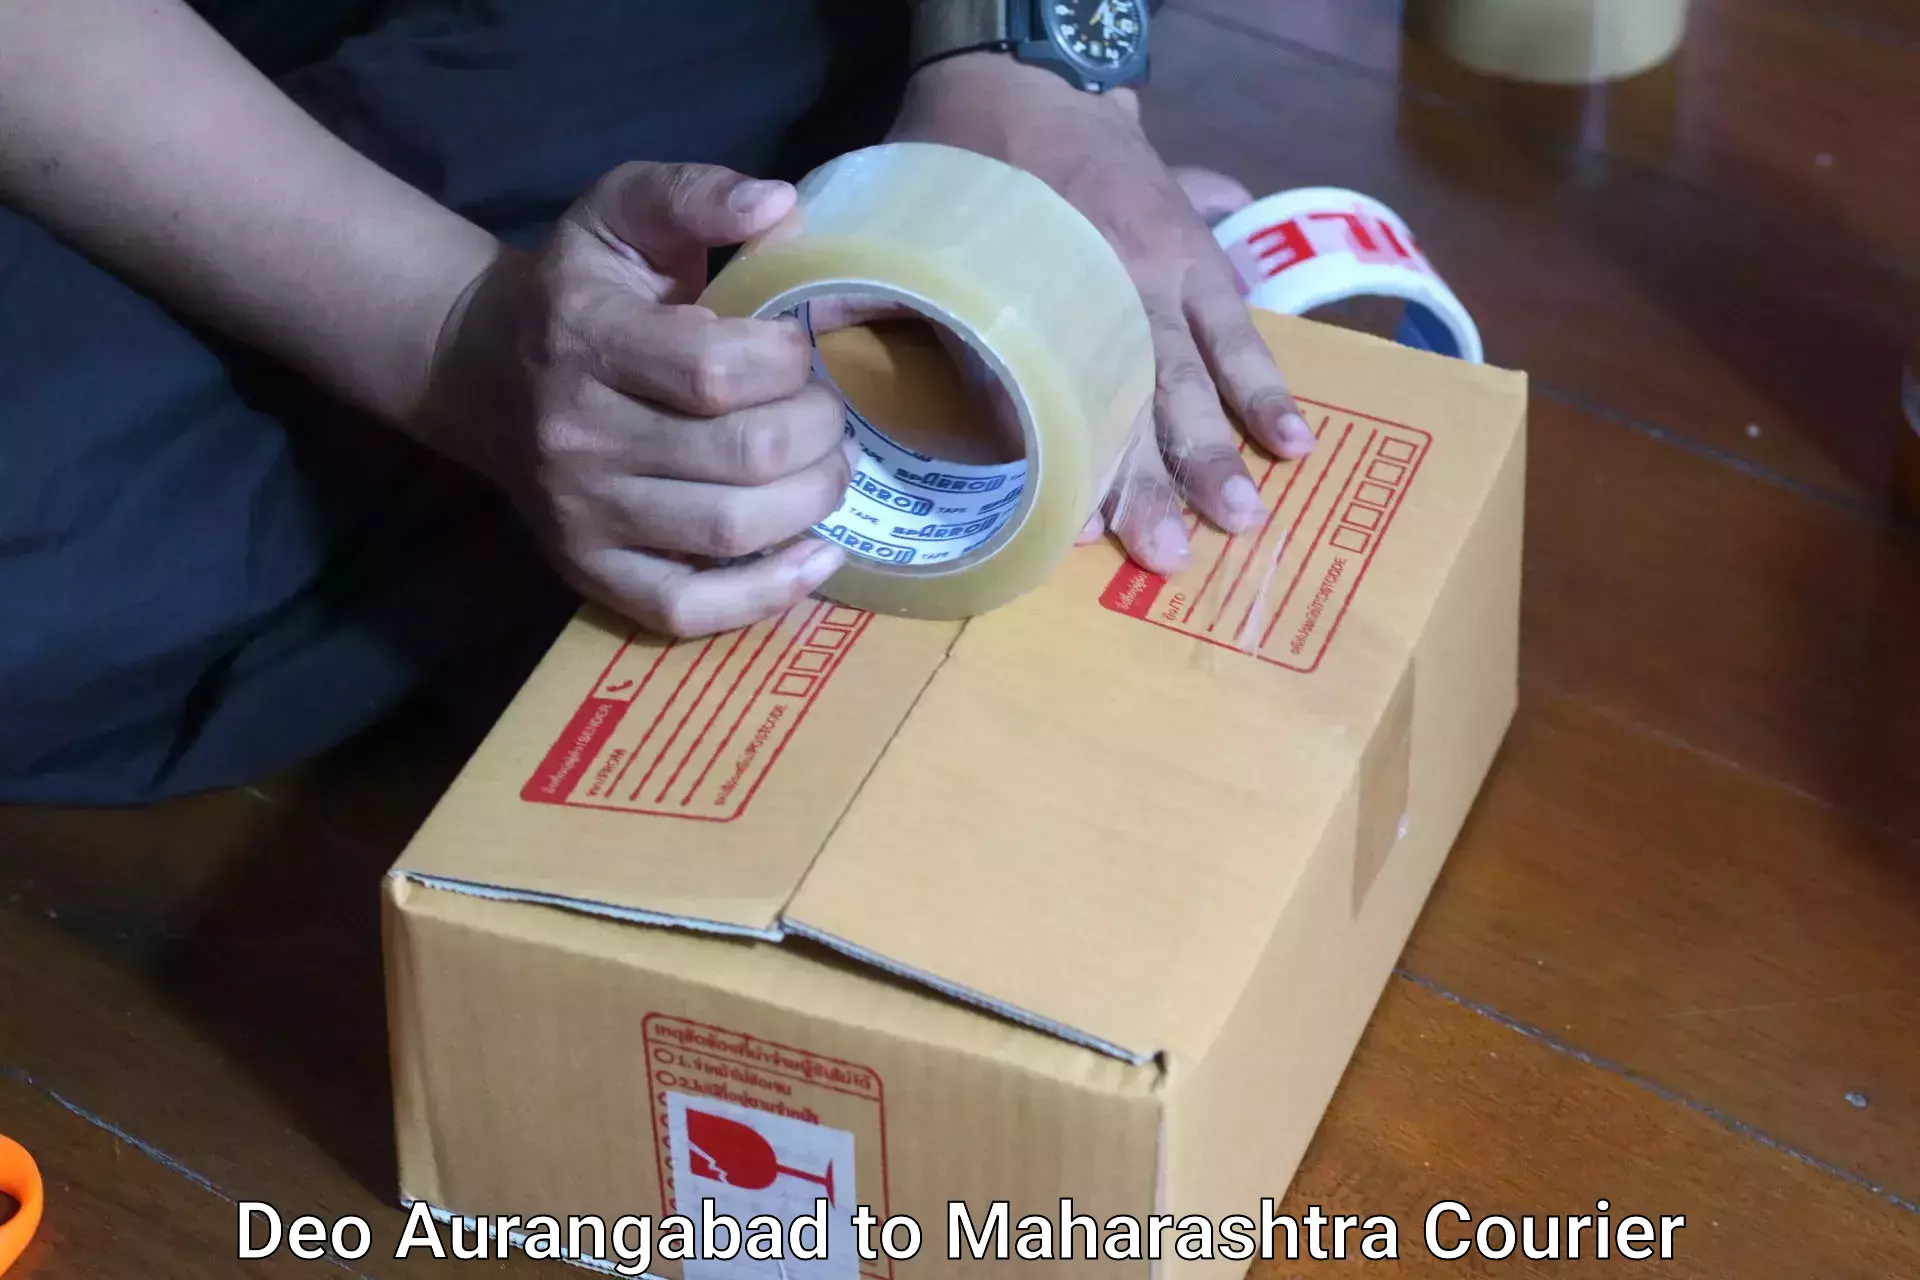 Luggage delivery app Deo Aurangabad to Maharashtra